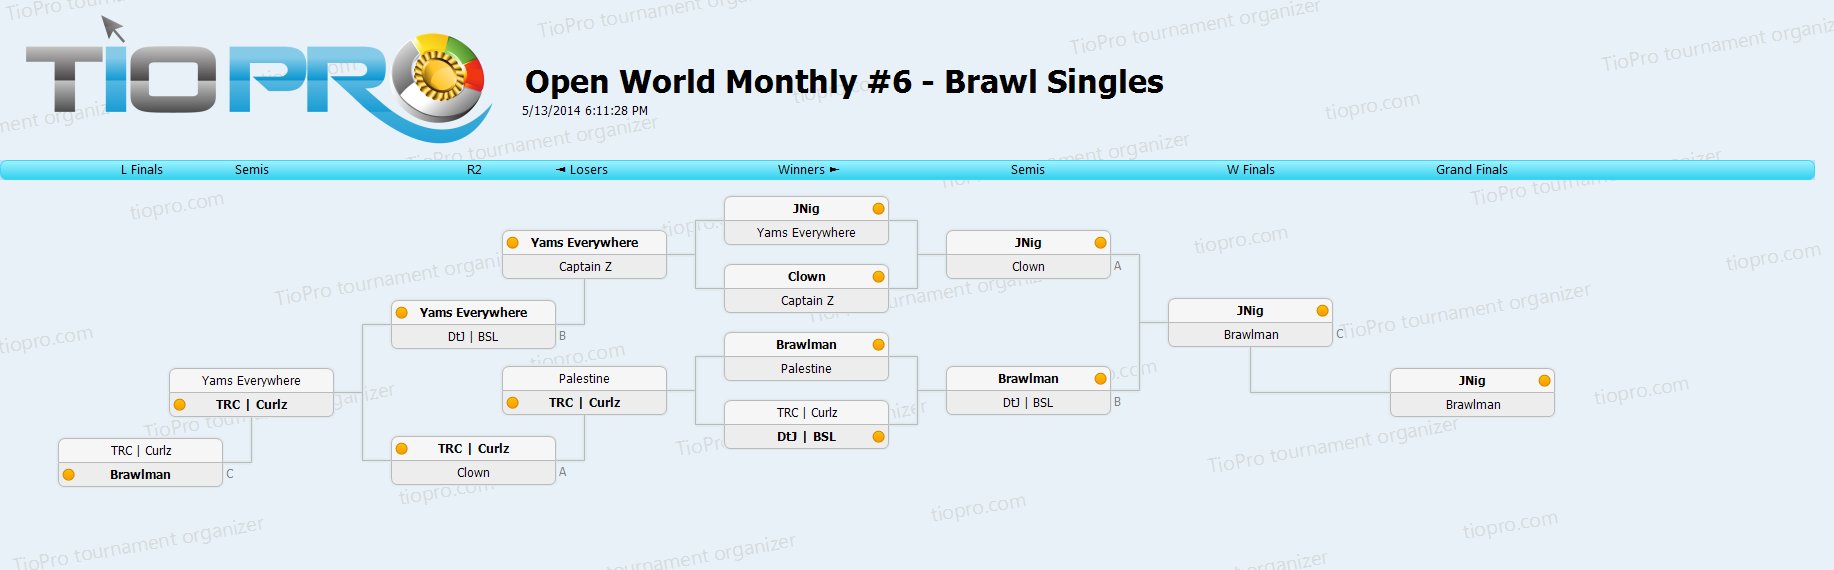 Open World Monthly #6 Brawl Singles